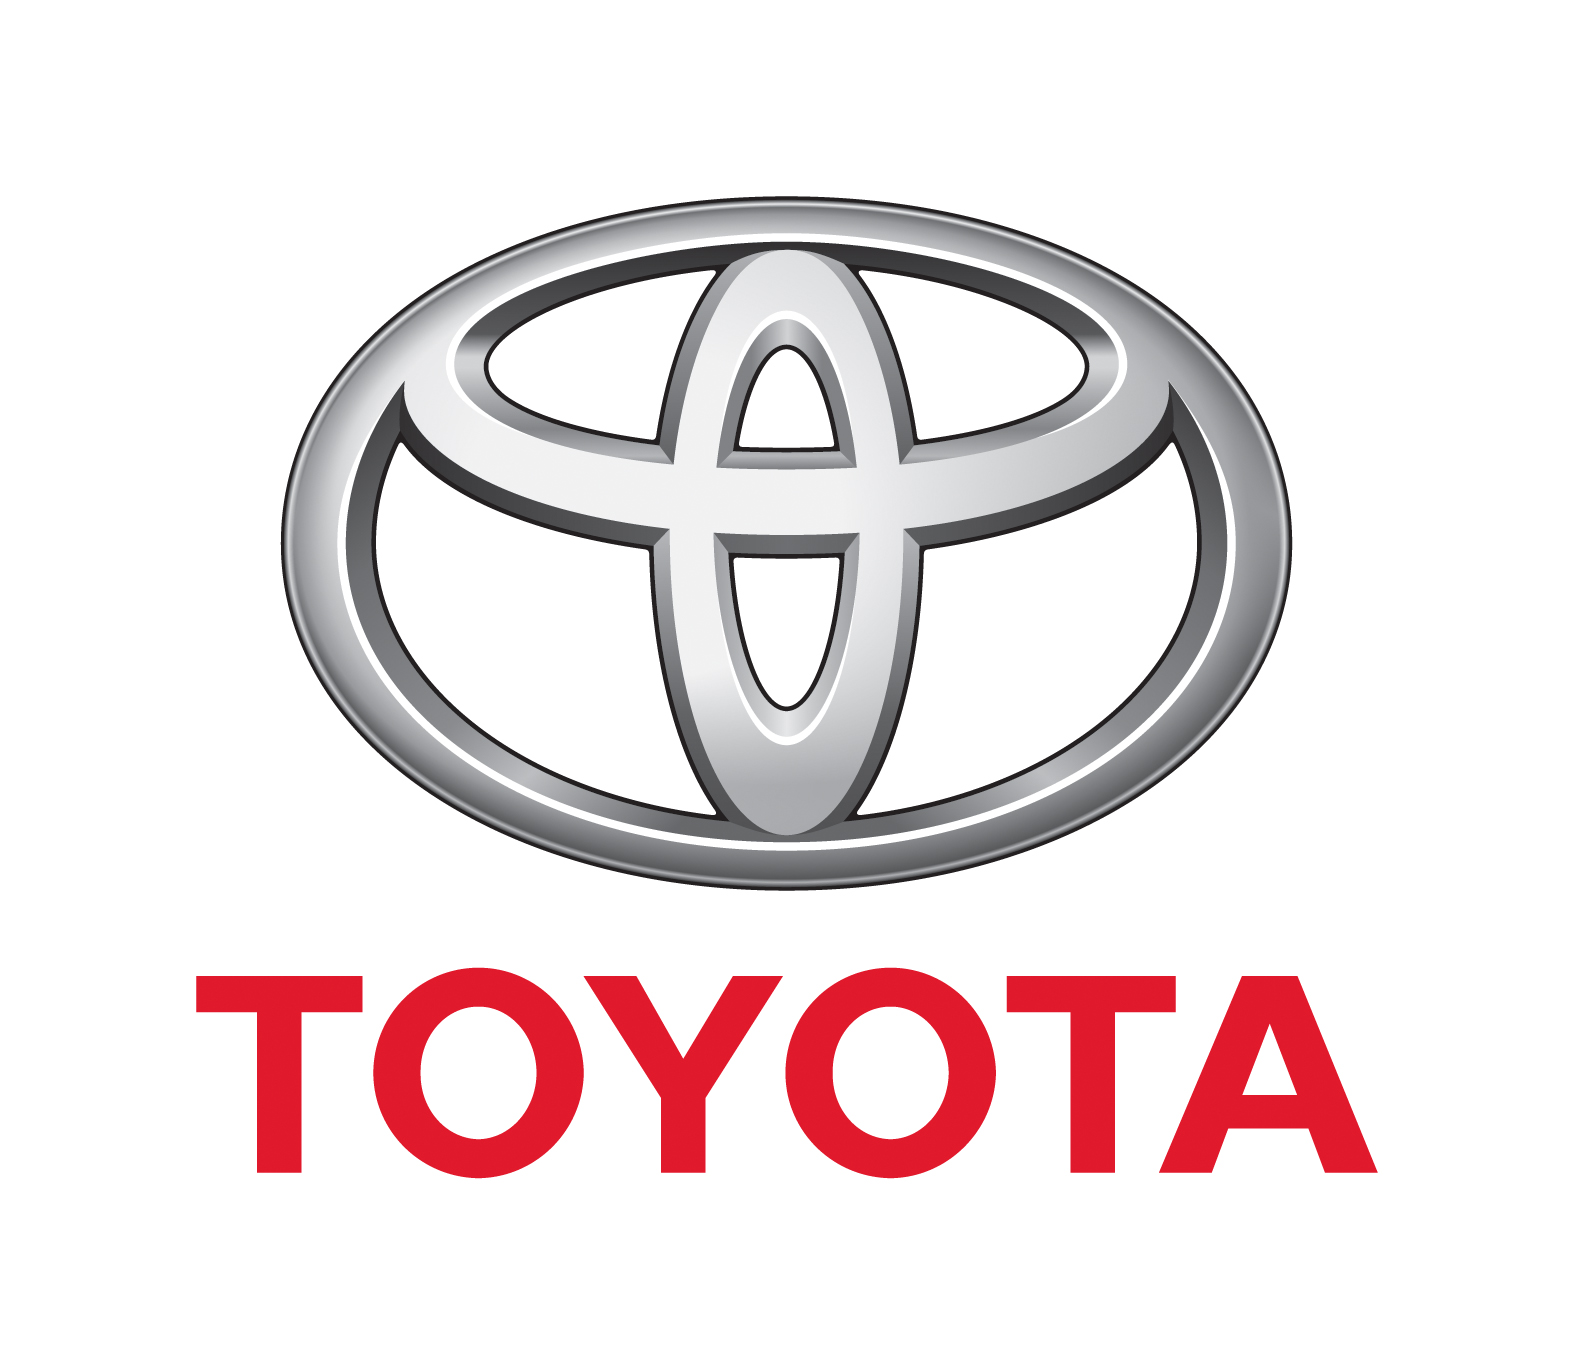 Toyota quarterly profits up 10%